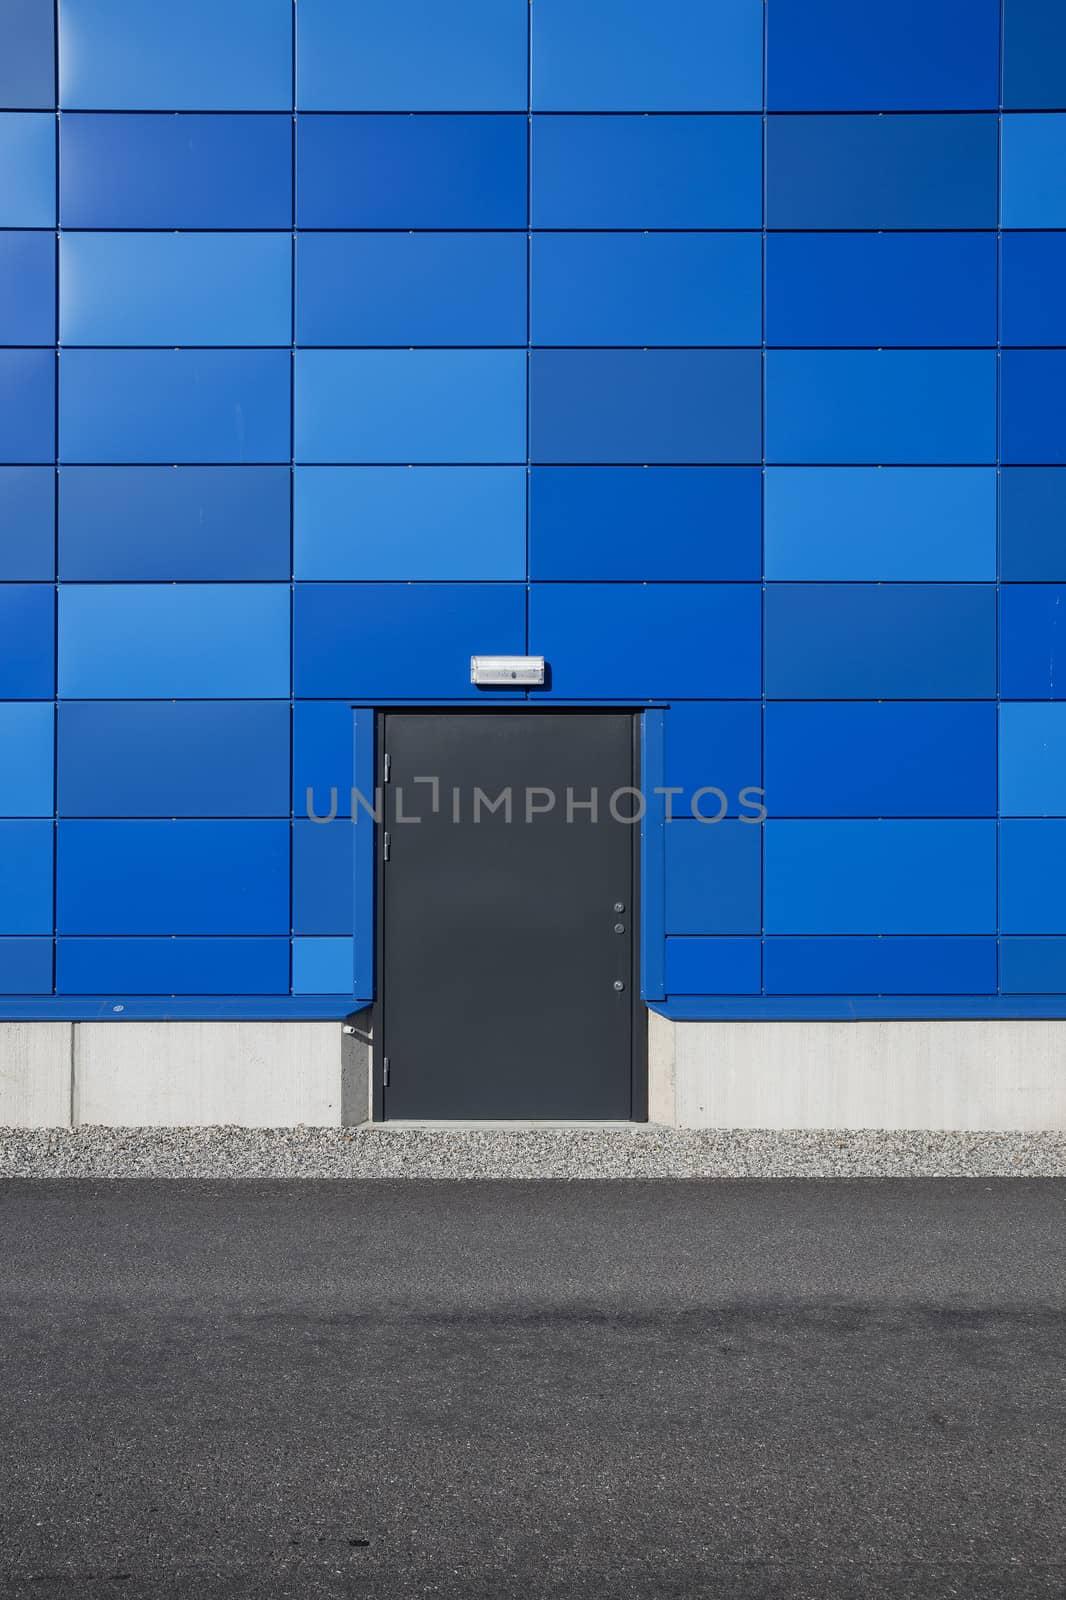 Locked door on blue wall